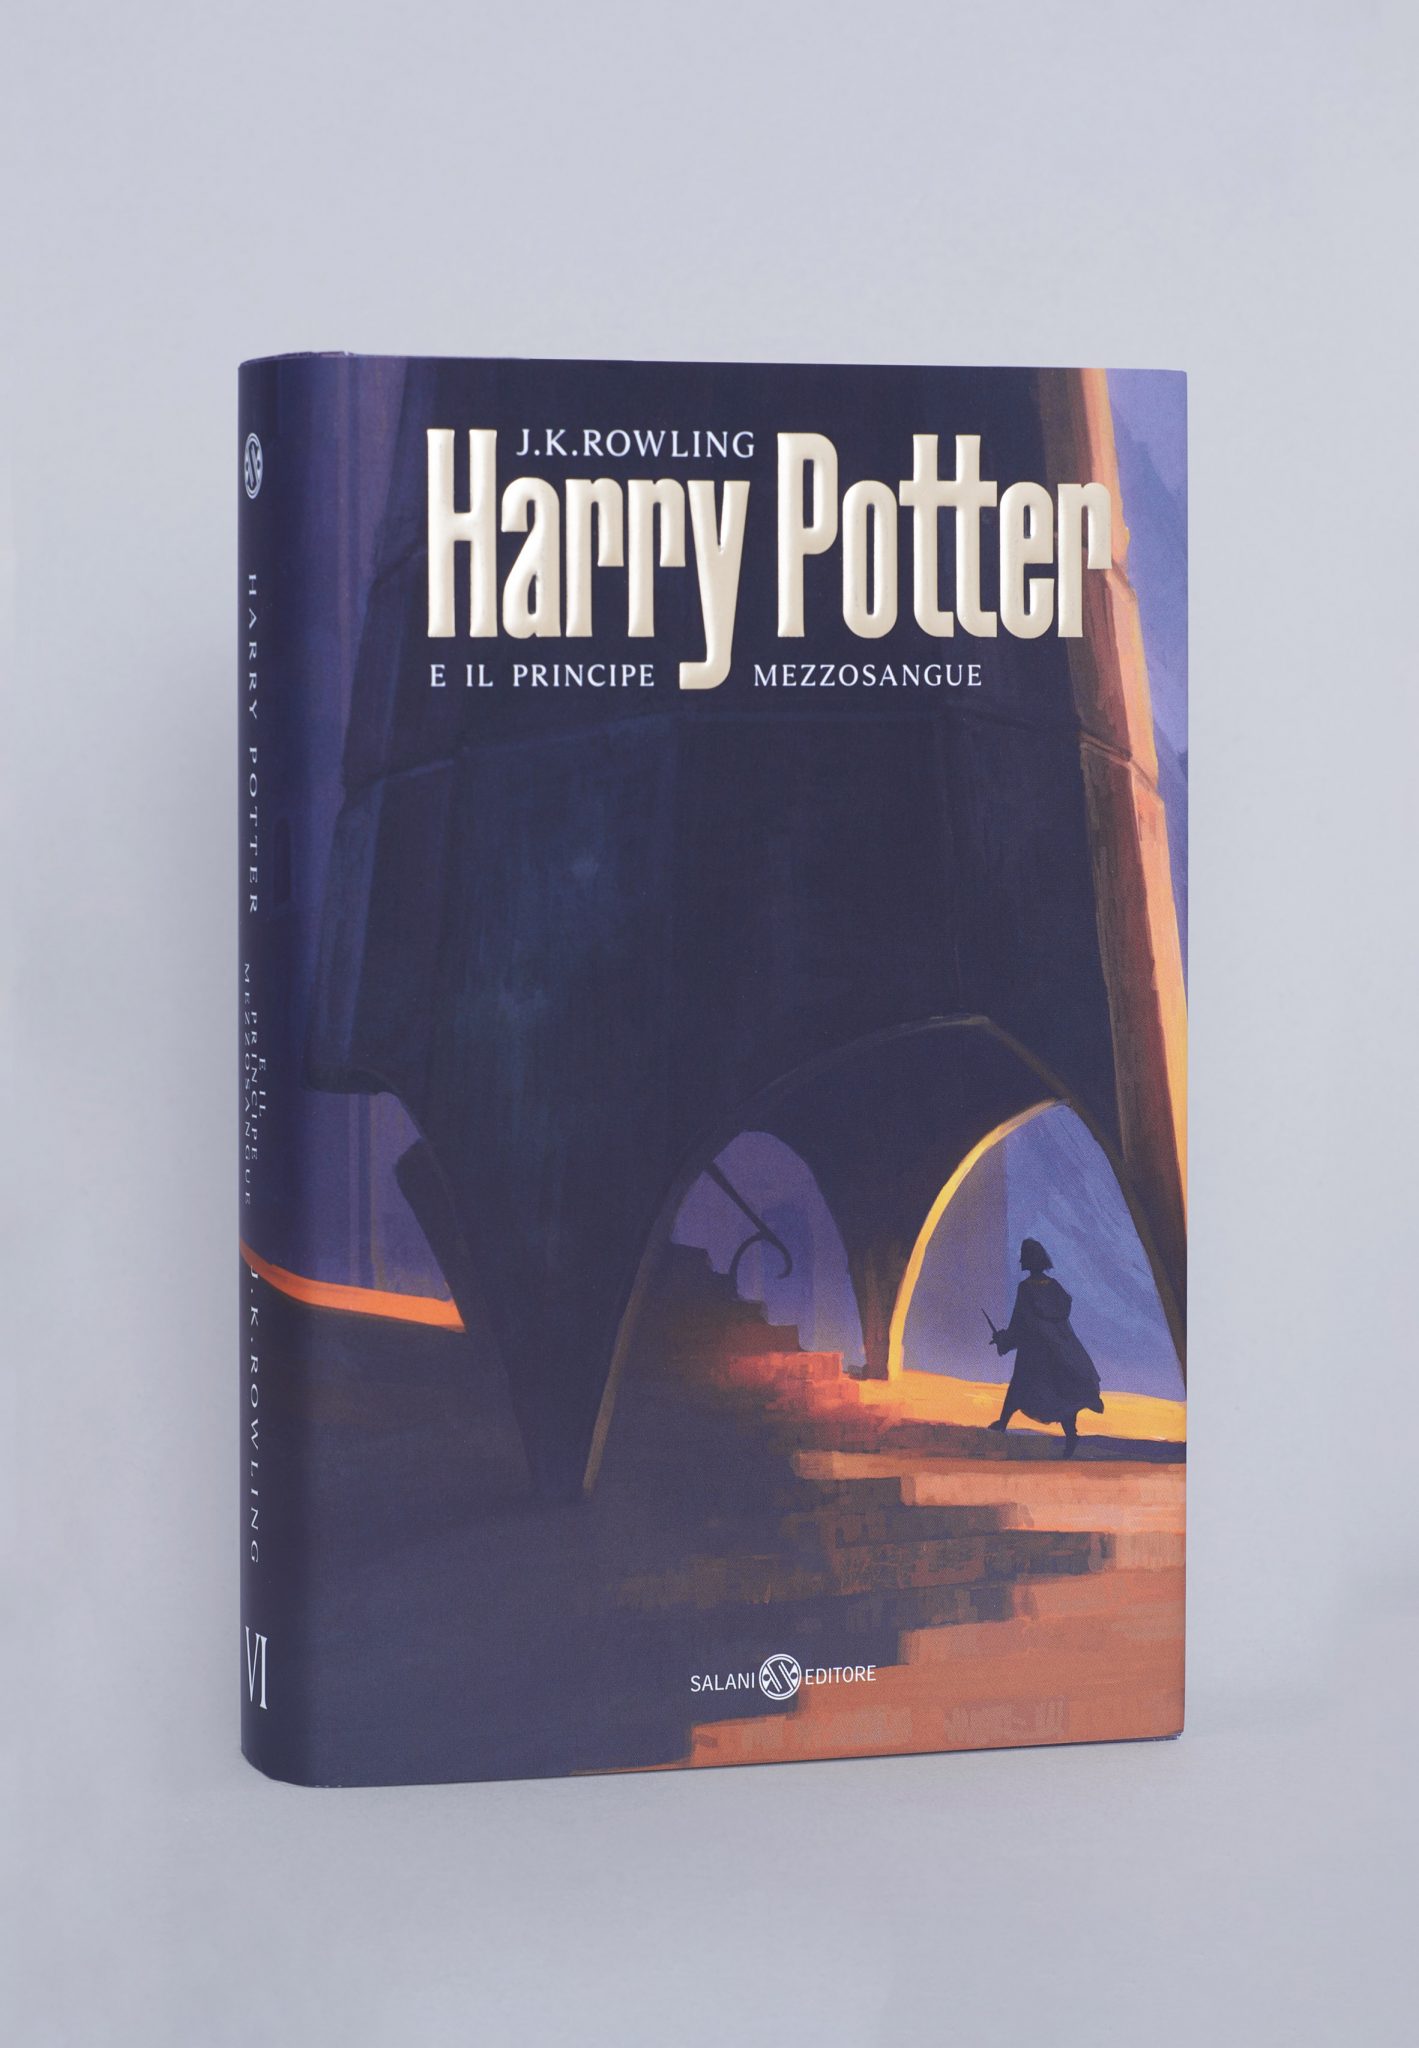 Архитектор Микеле де Лукки перепридумал обложки книг о Гарри Поттере (фото 6)